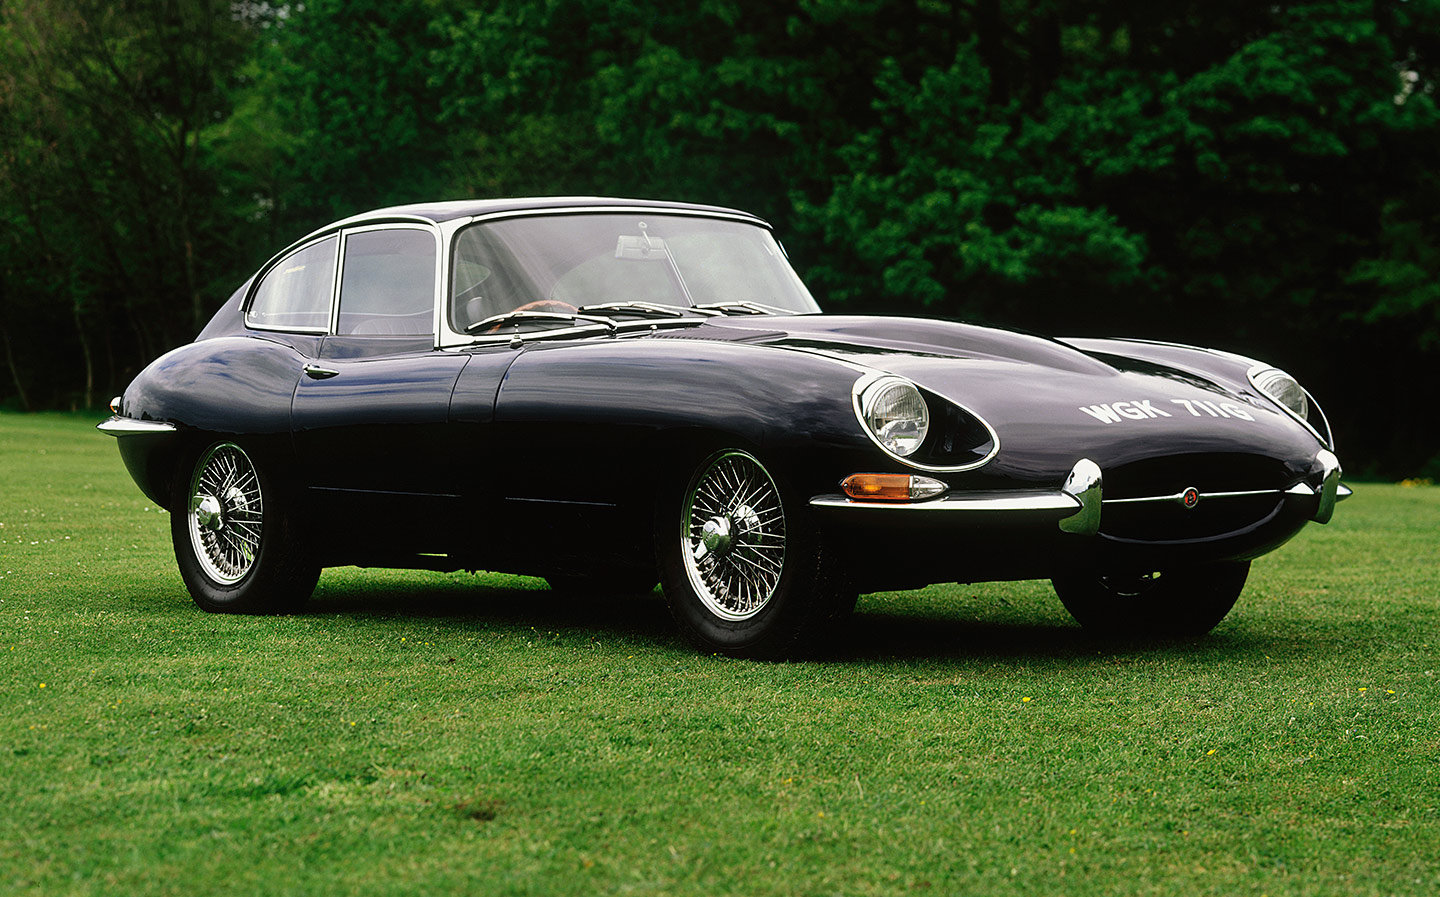 Ray Mears' dream car: Jaguar E-type